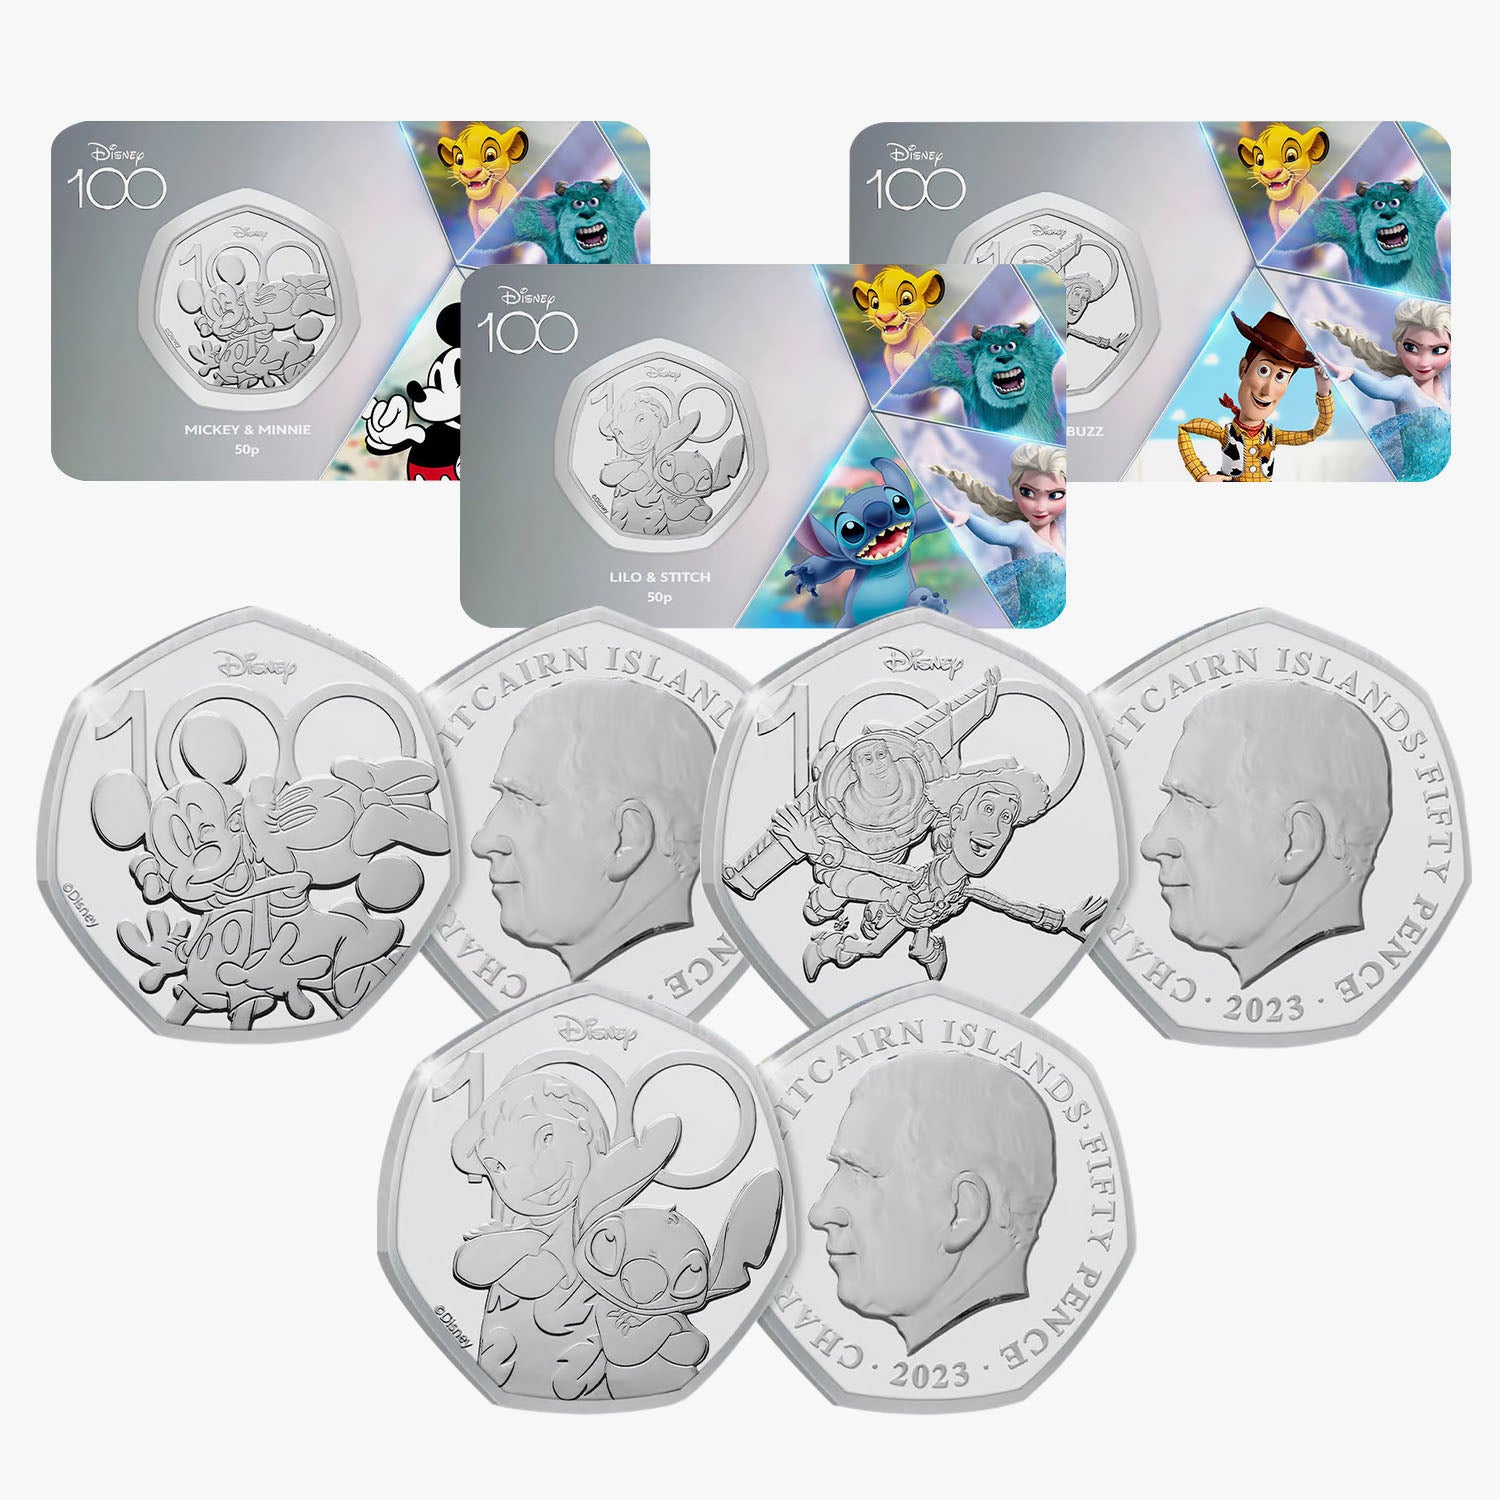 Disney 100th Anniversary 2023 50p BU Coin Bundle